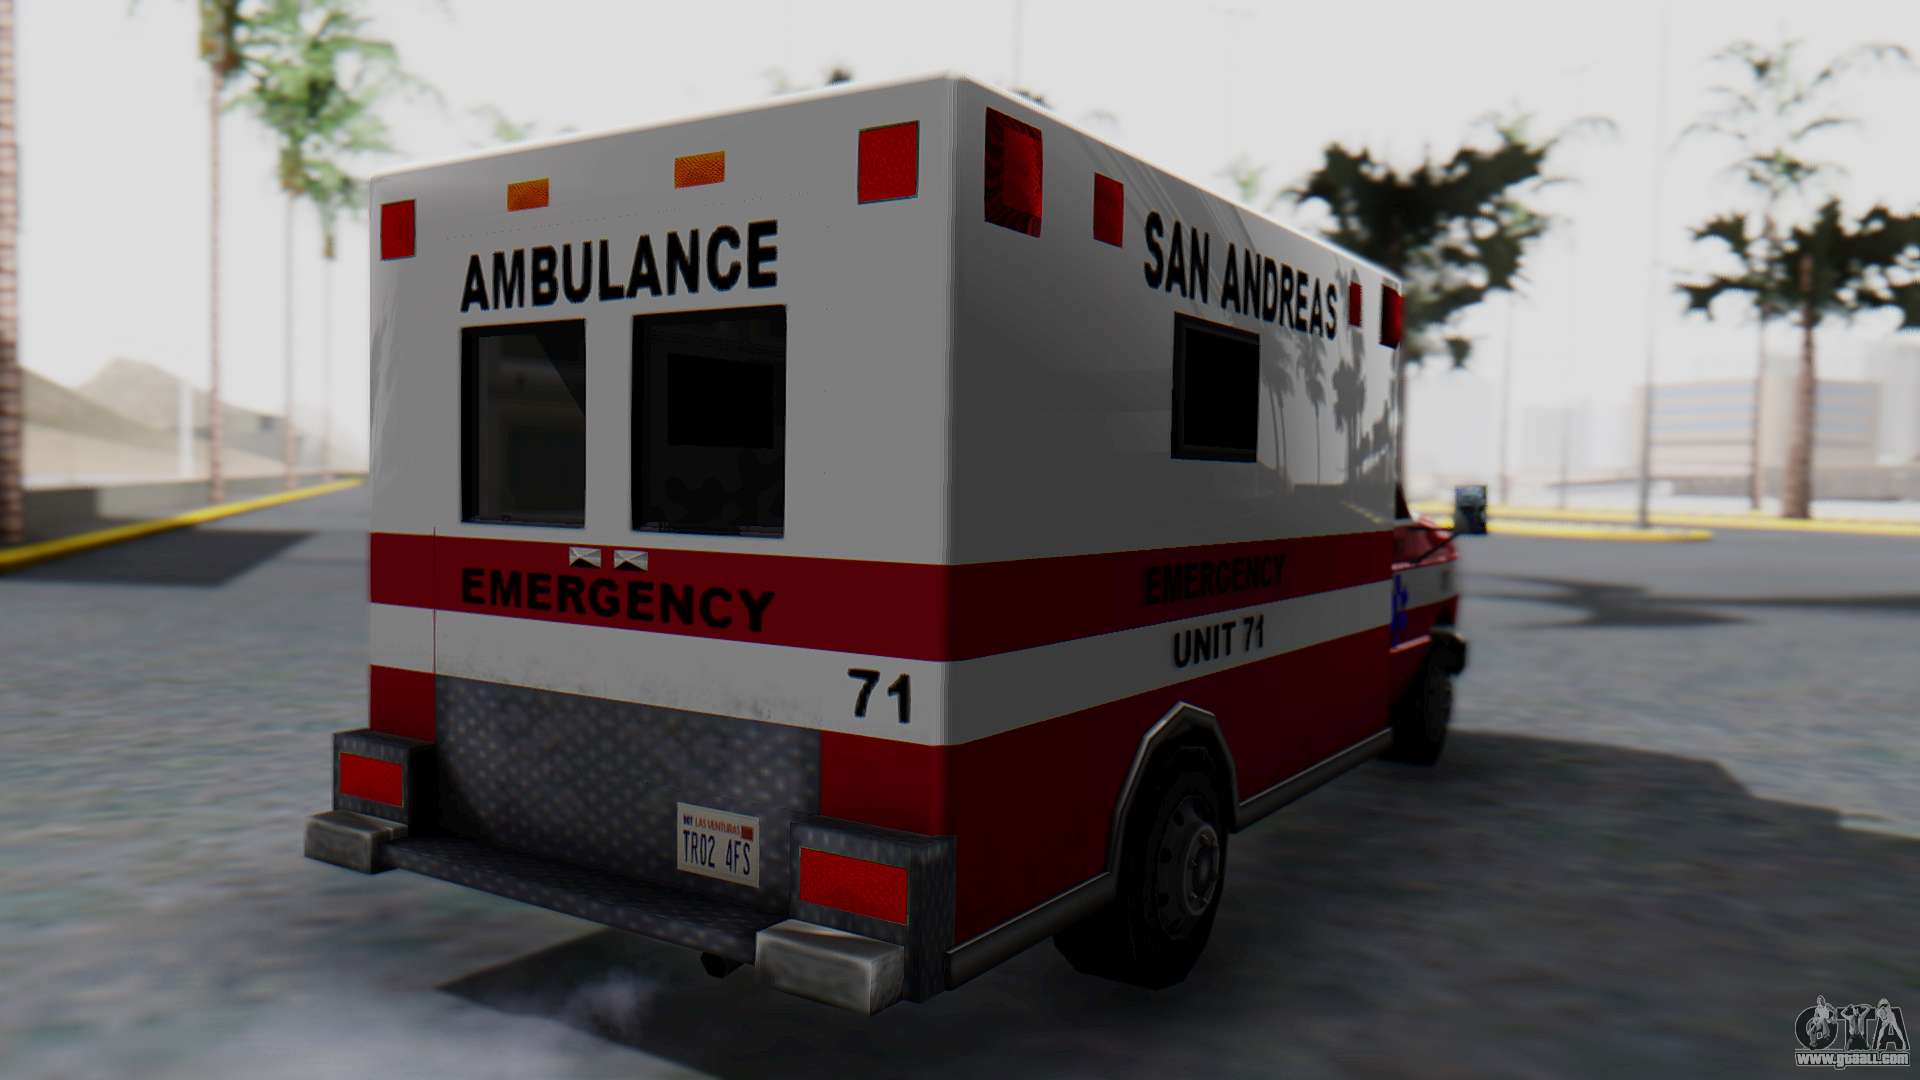 Ambulance with Lightbars for GTA San Andreas